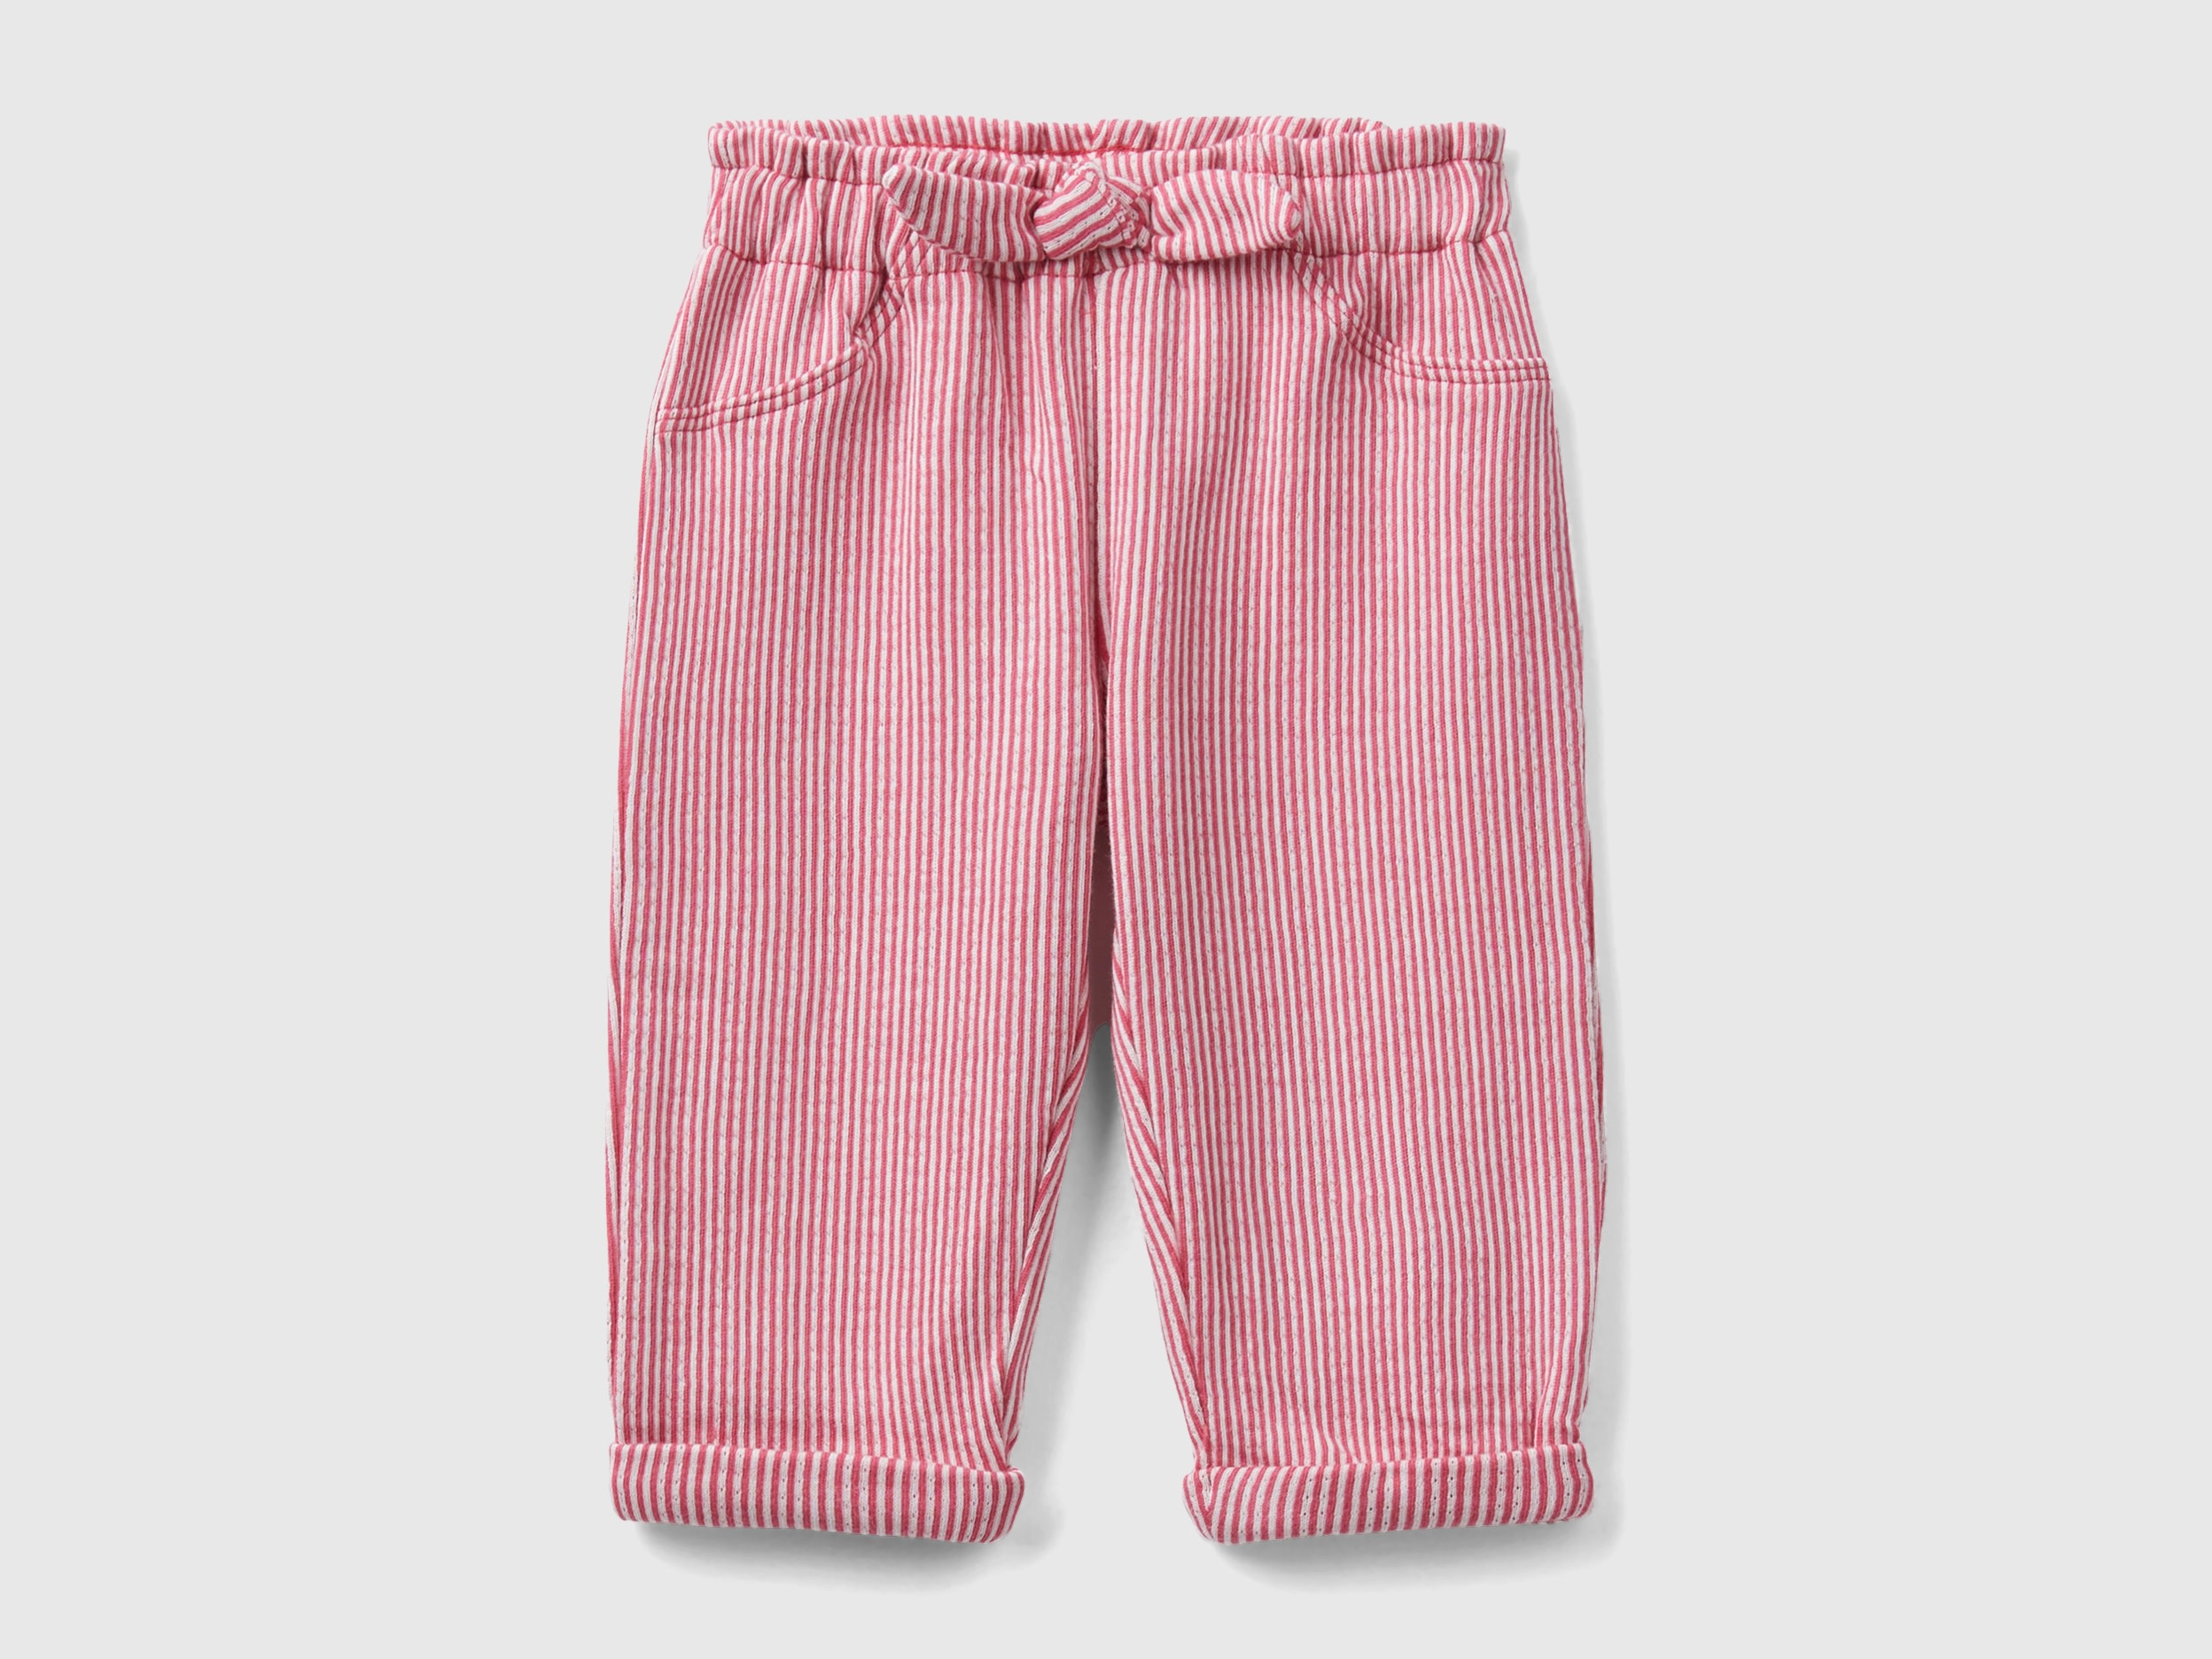 Benetton, Striped Paperbag Trousers, size 0-1, Salmon, Kids